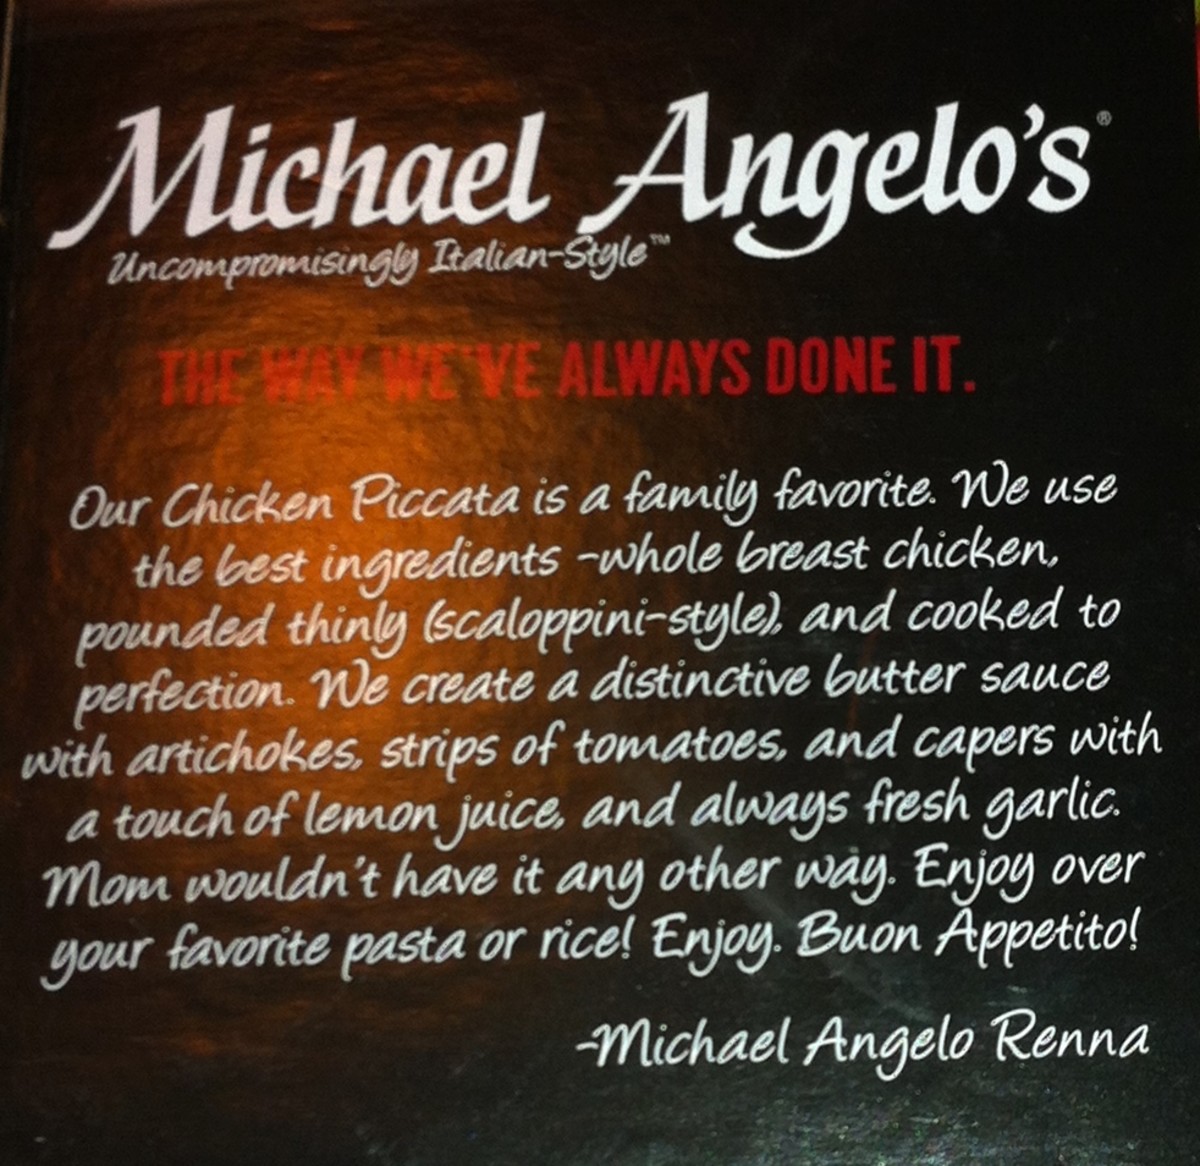 Michael angelo's chicken piccata